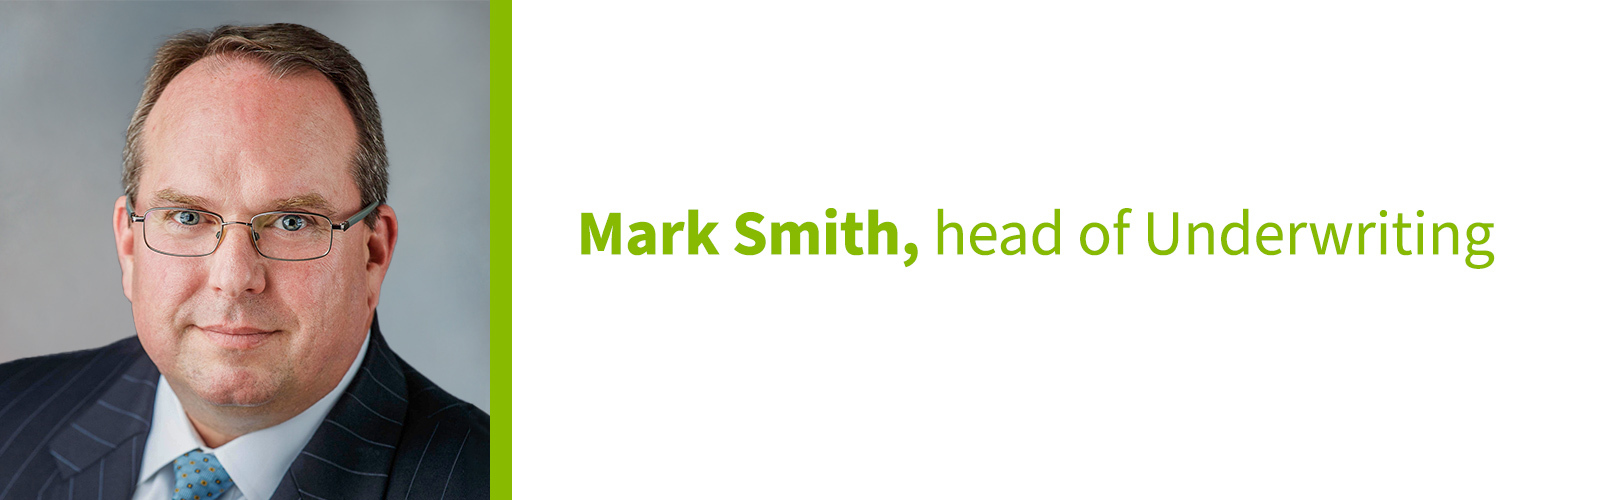 Mark Smith, head of Underwriting